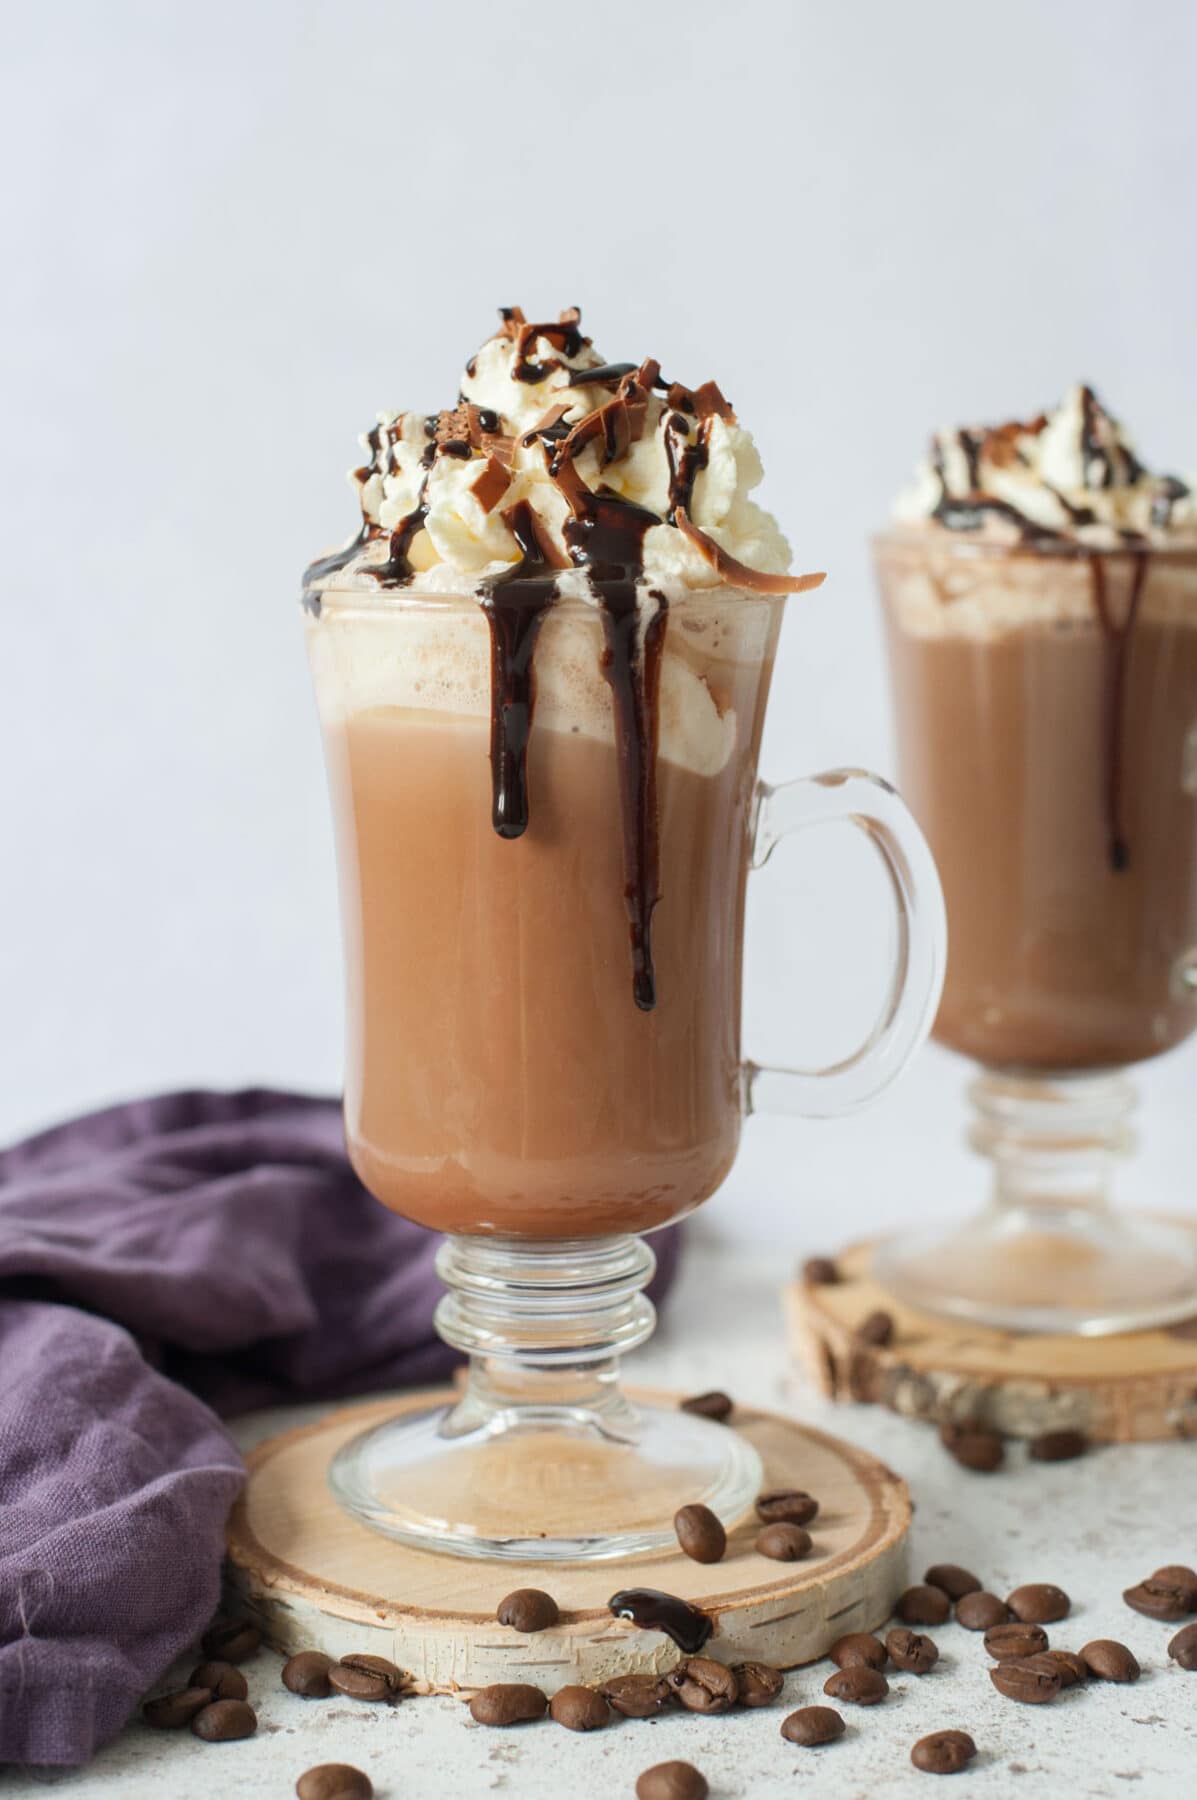 Dark Chocolate Coffee Recipe: How to Make Dark Chocolate Coffee At